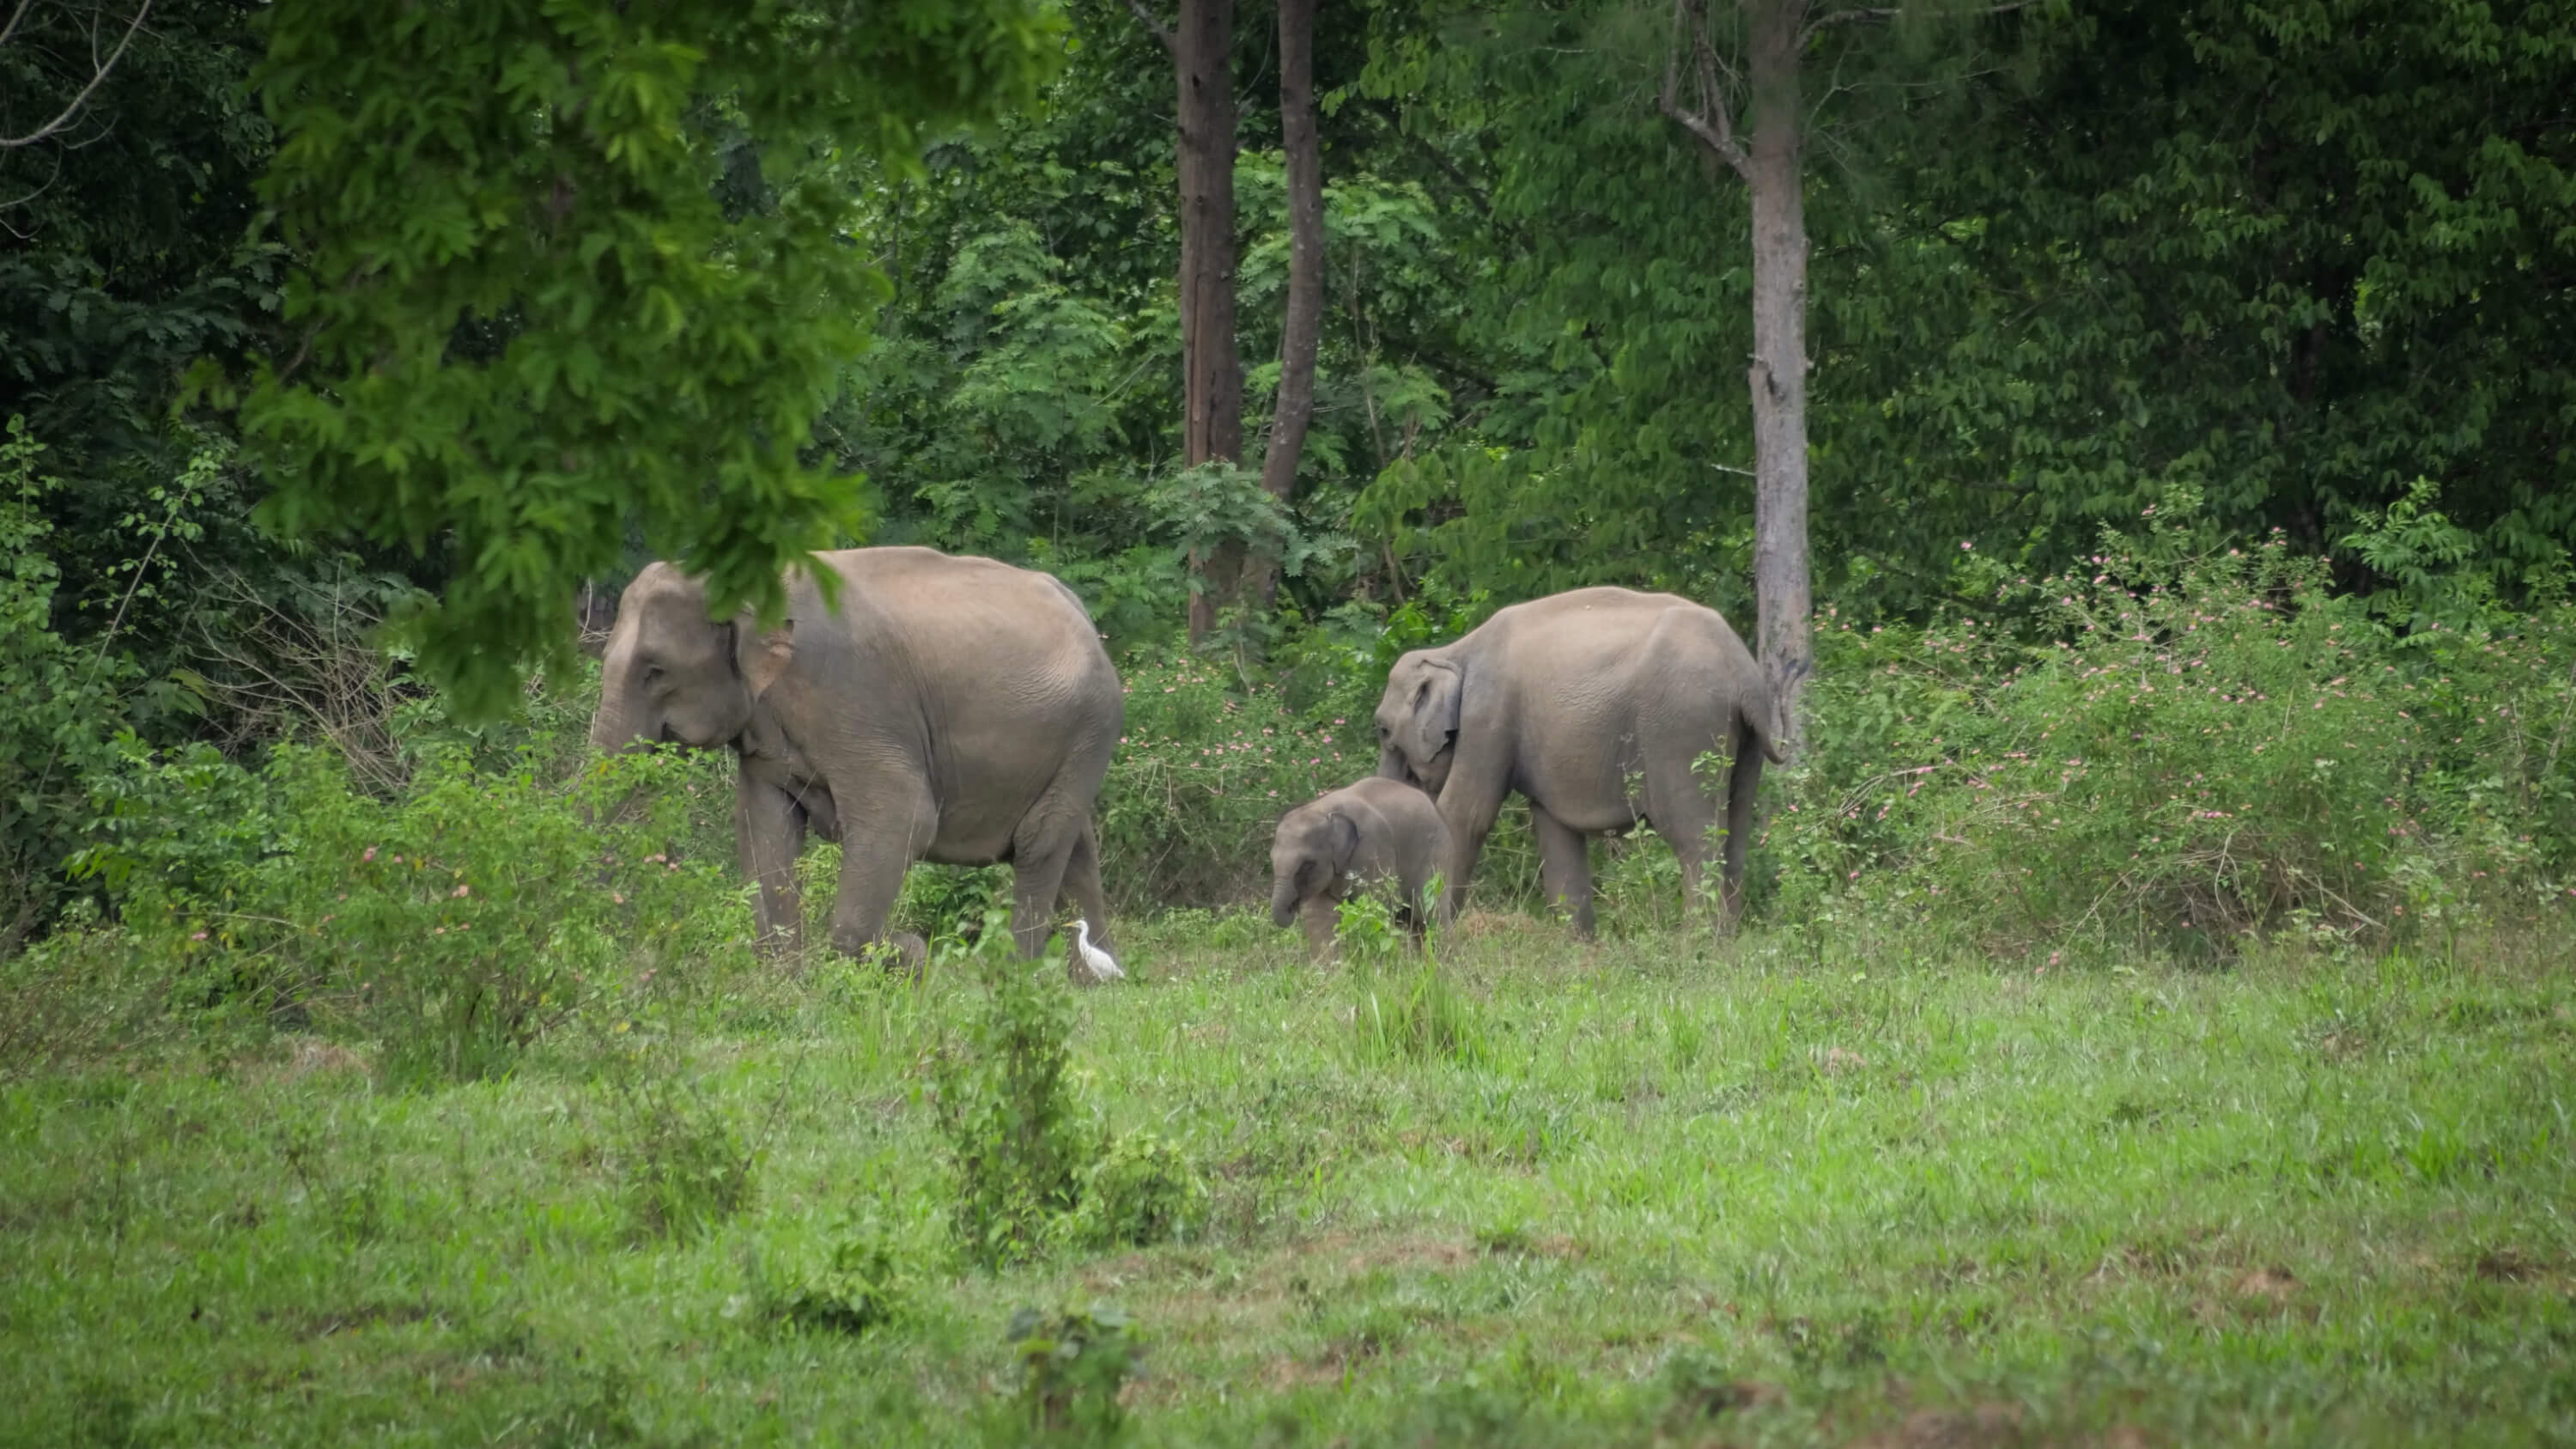 wild elephants in Thailand at Kuiburi